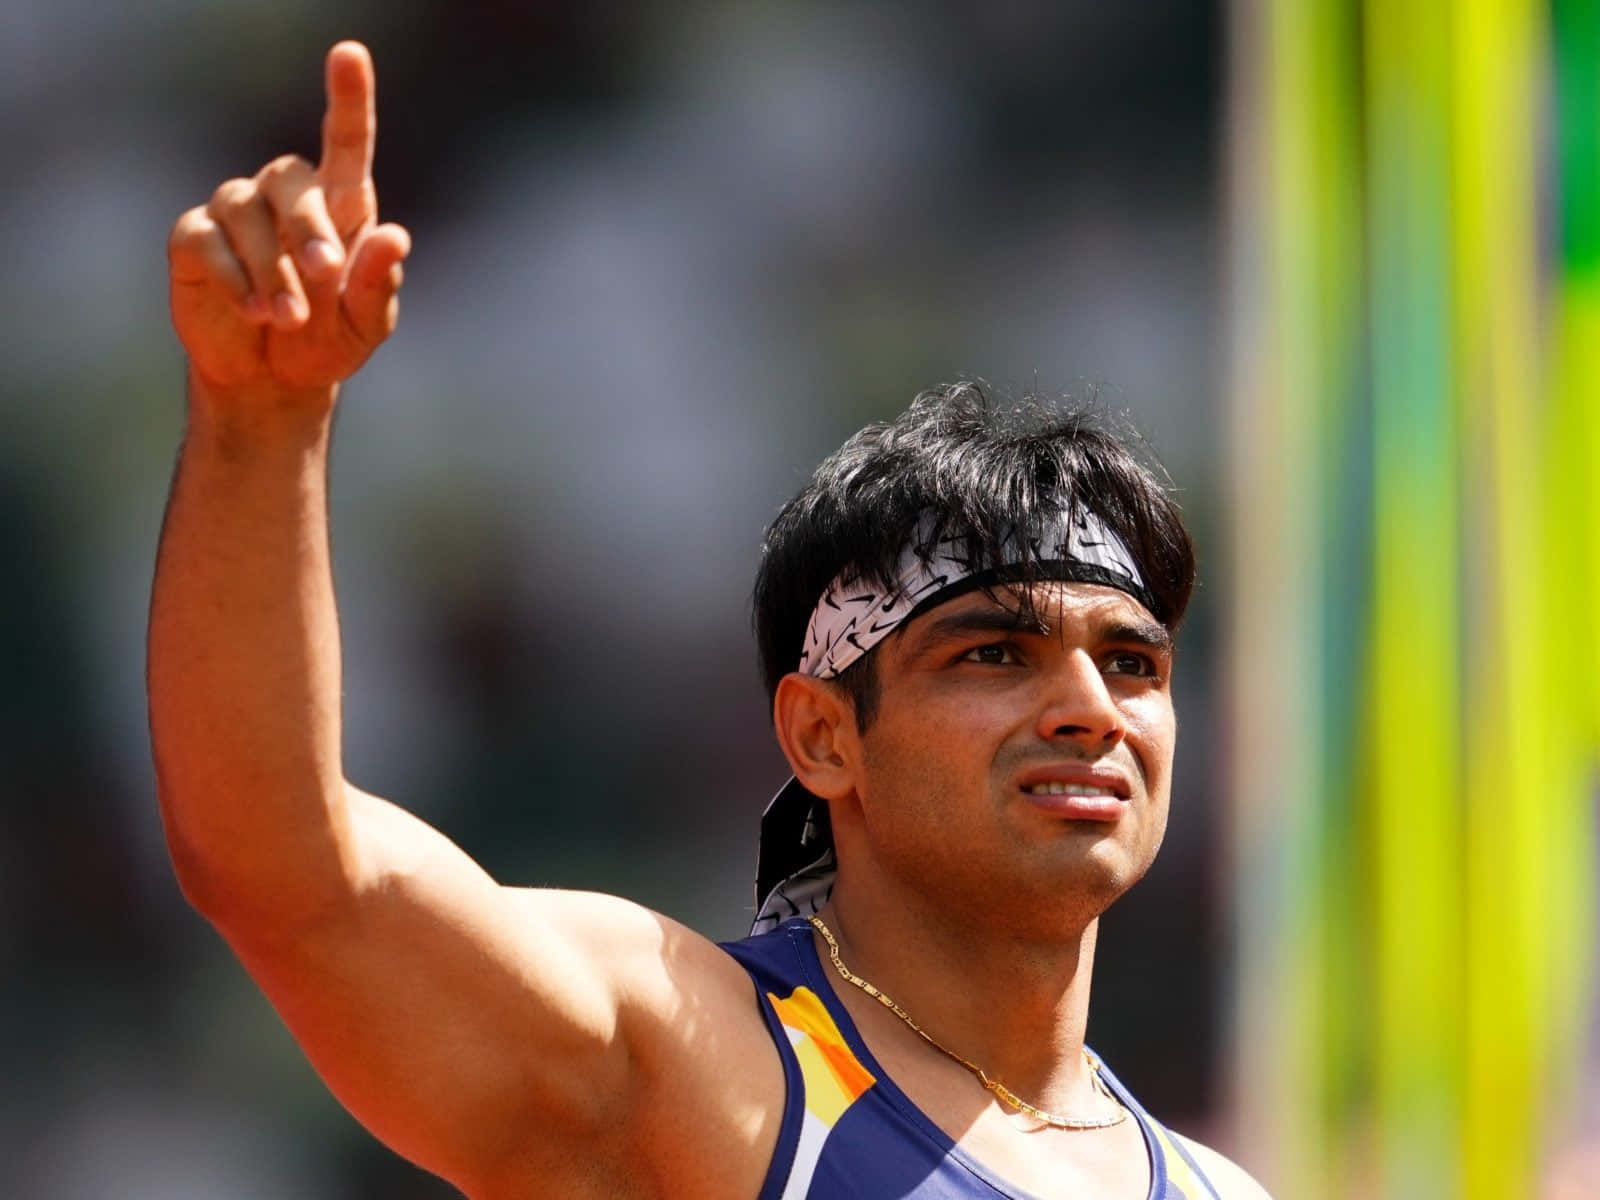 India's own javelin champ Neeraj Chopra